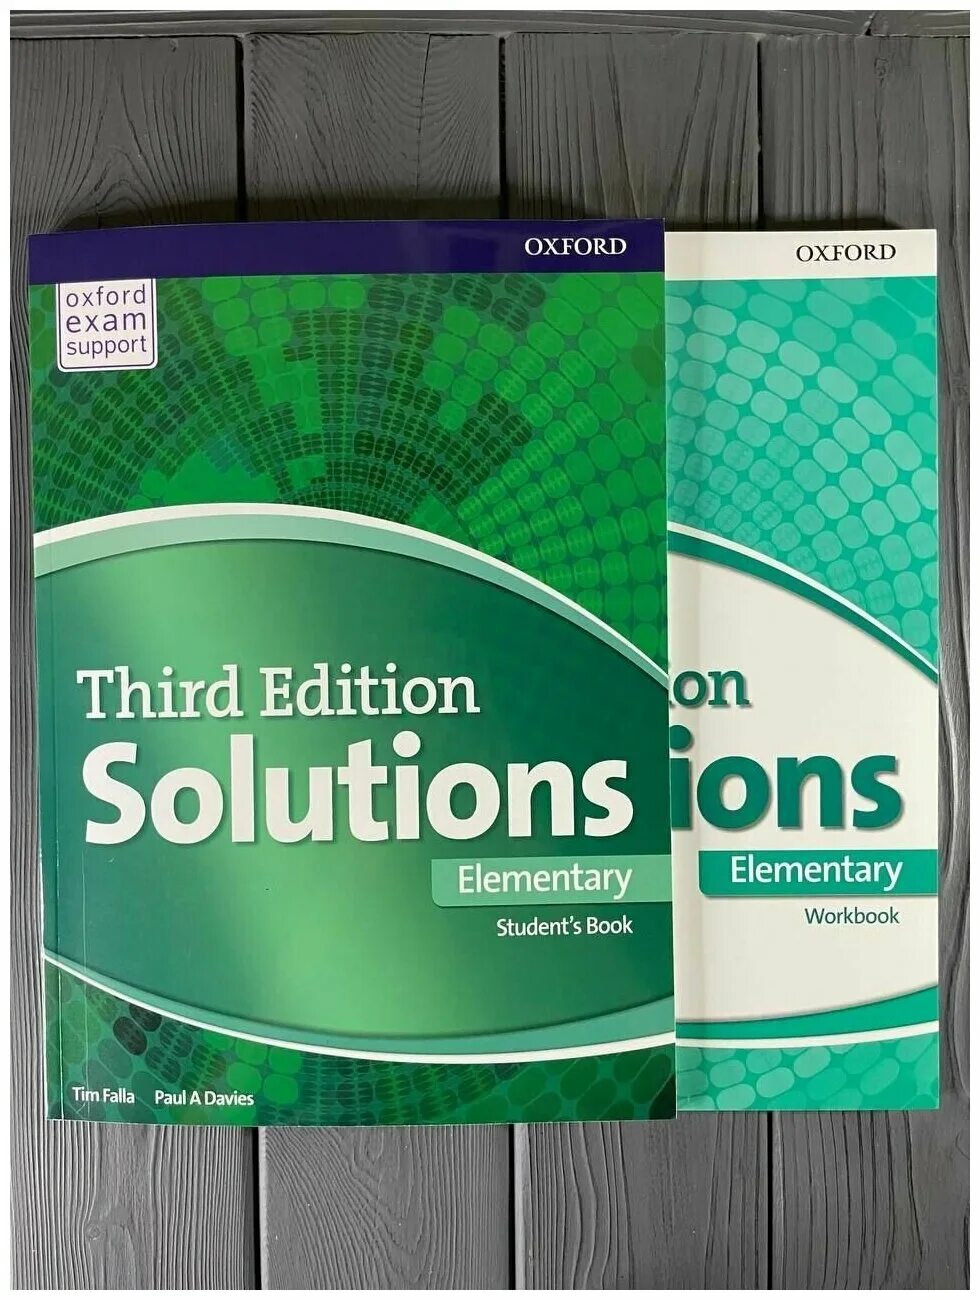 Solutions elementary book ответы. Solutions Elementary 3rd Edition. Учебник solutions Elementary 3 Edition. Third Edition solutions Elementary. Oxford solutions Elementary.